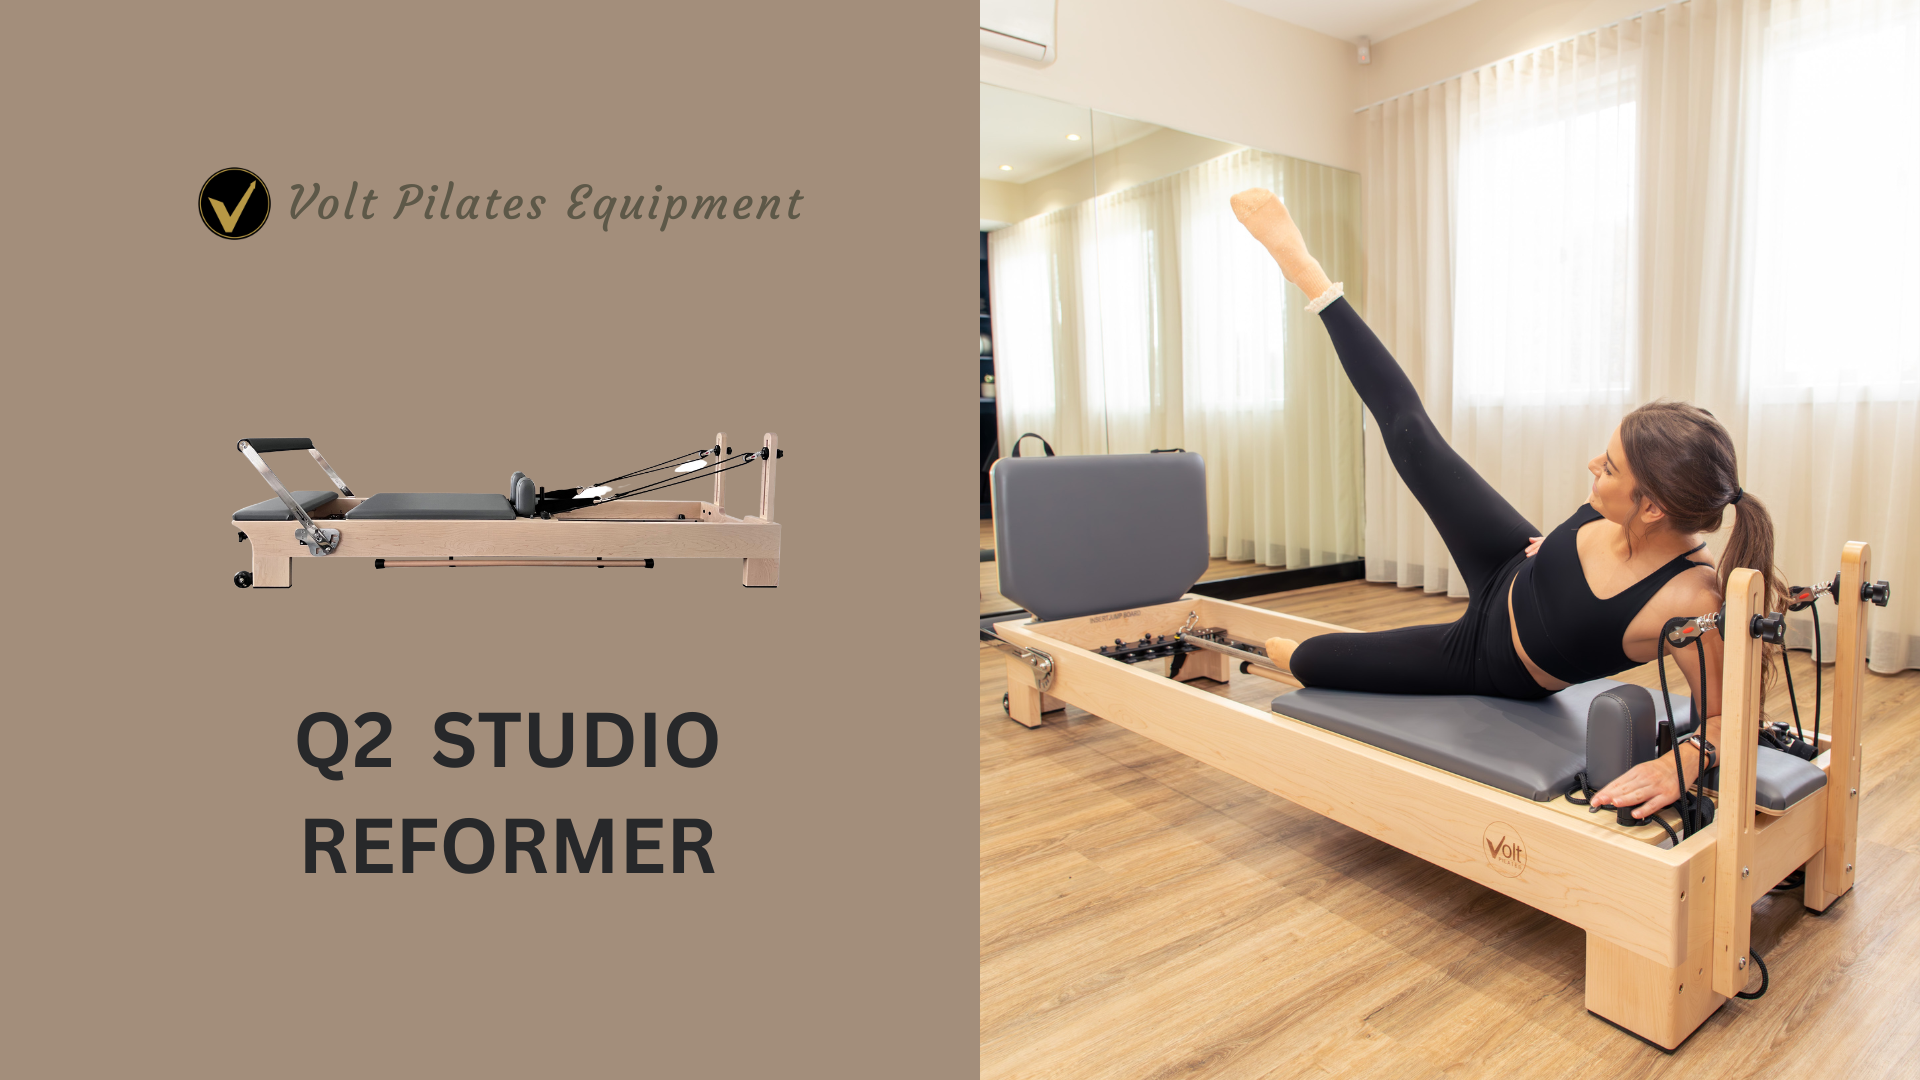 Volt Pilates Equipment – Pilates equipment/ Pilates reformer/ volt Pilates,  Online order & Delivery to your home